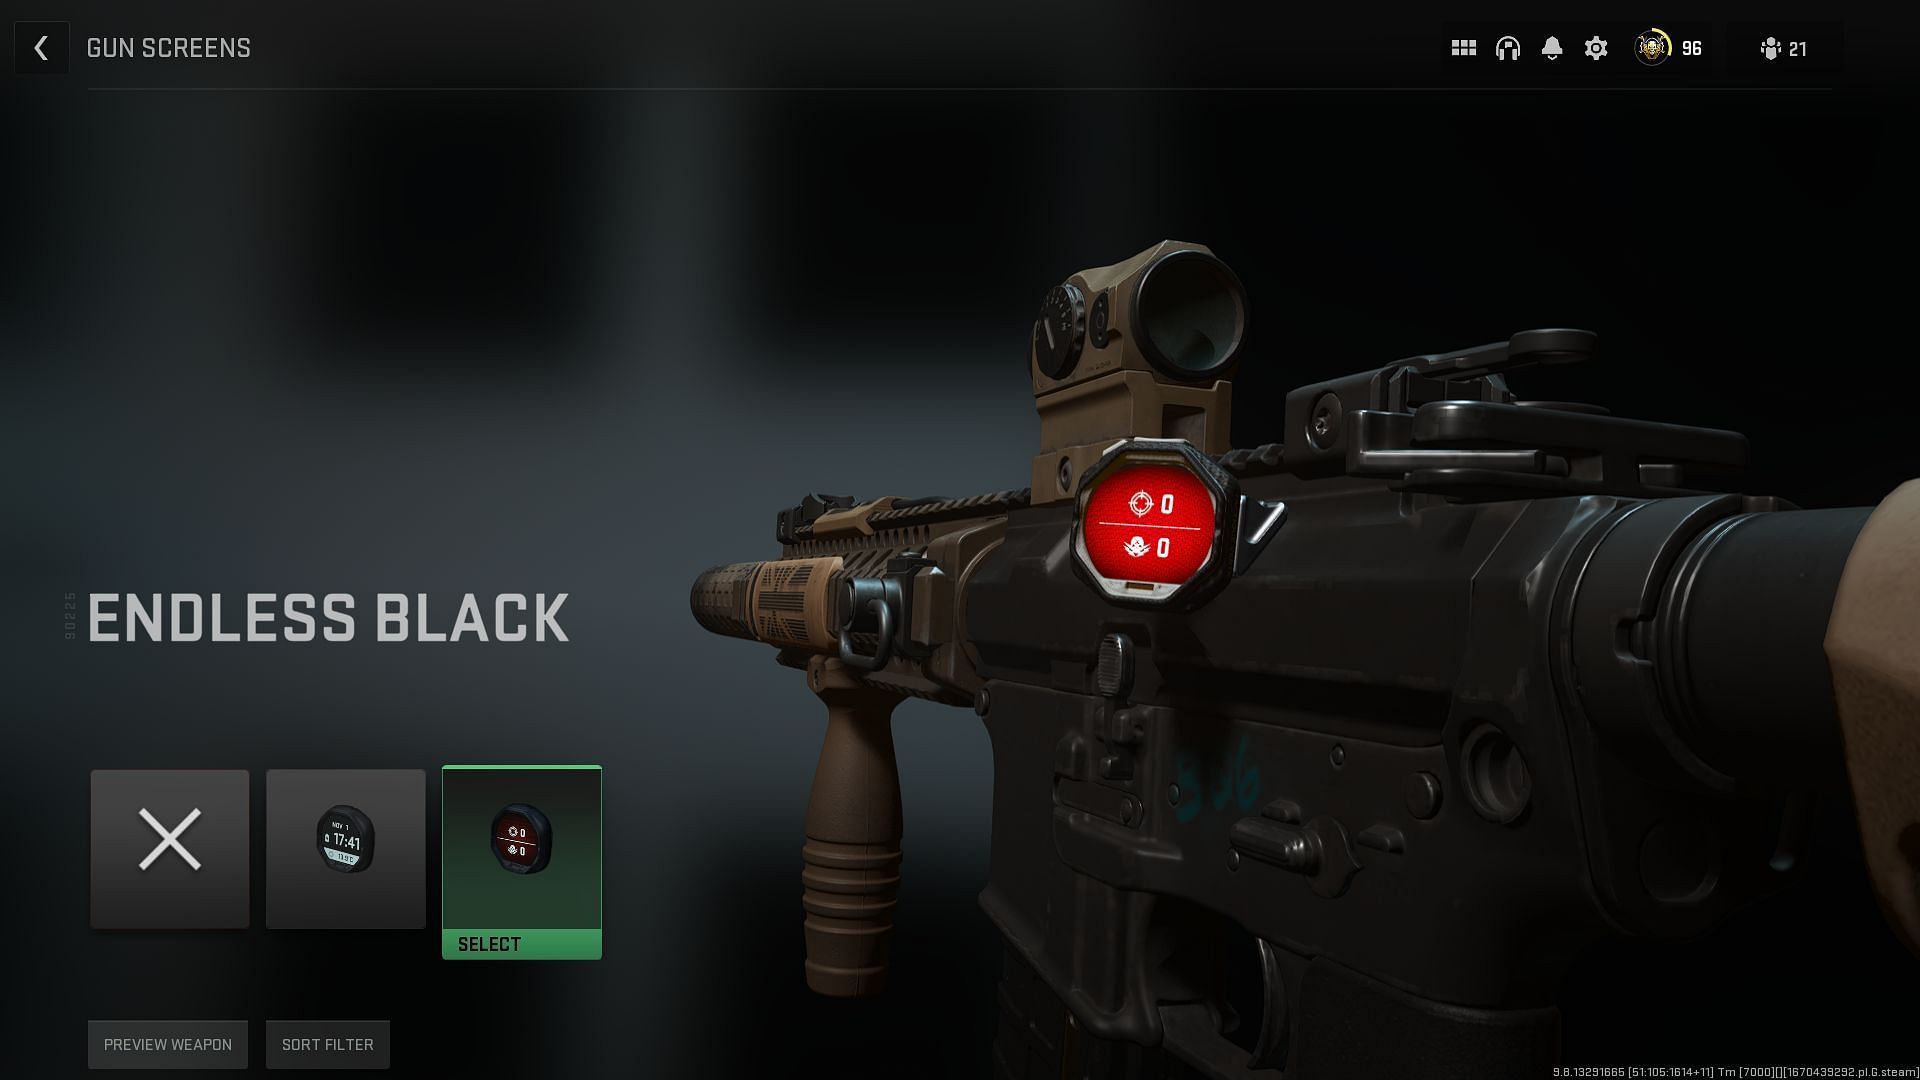 Equipping the Endless Black Gun Screen (Image via Activision)